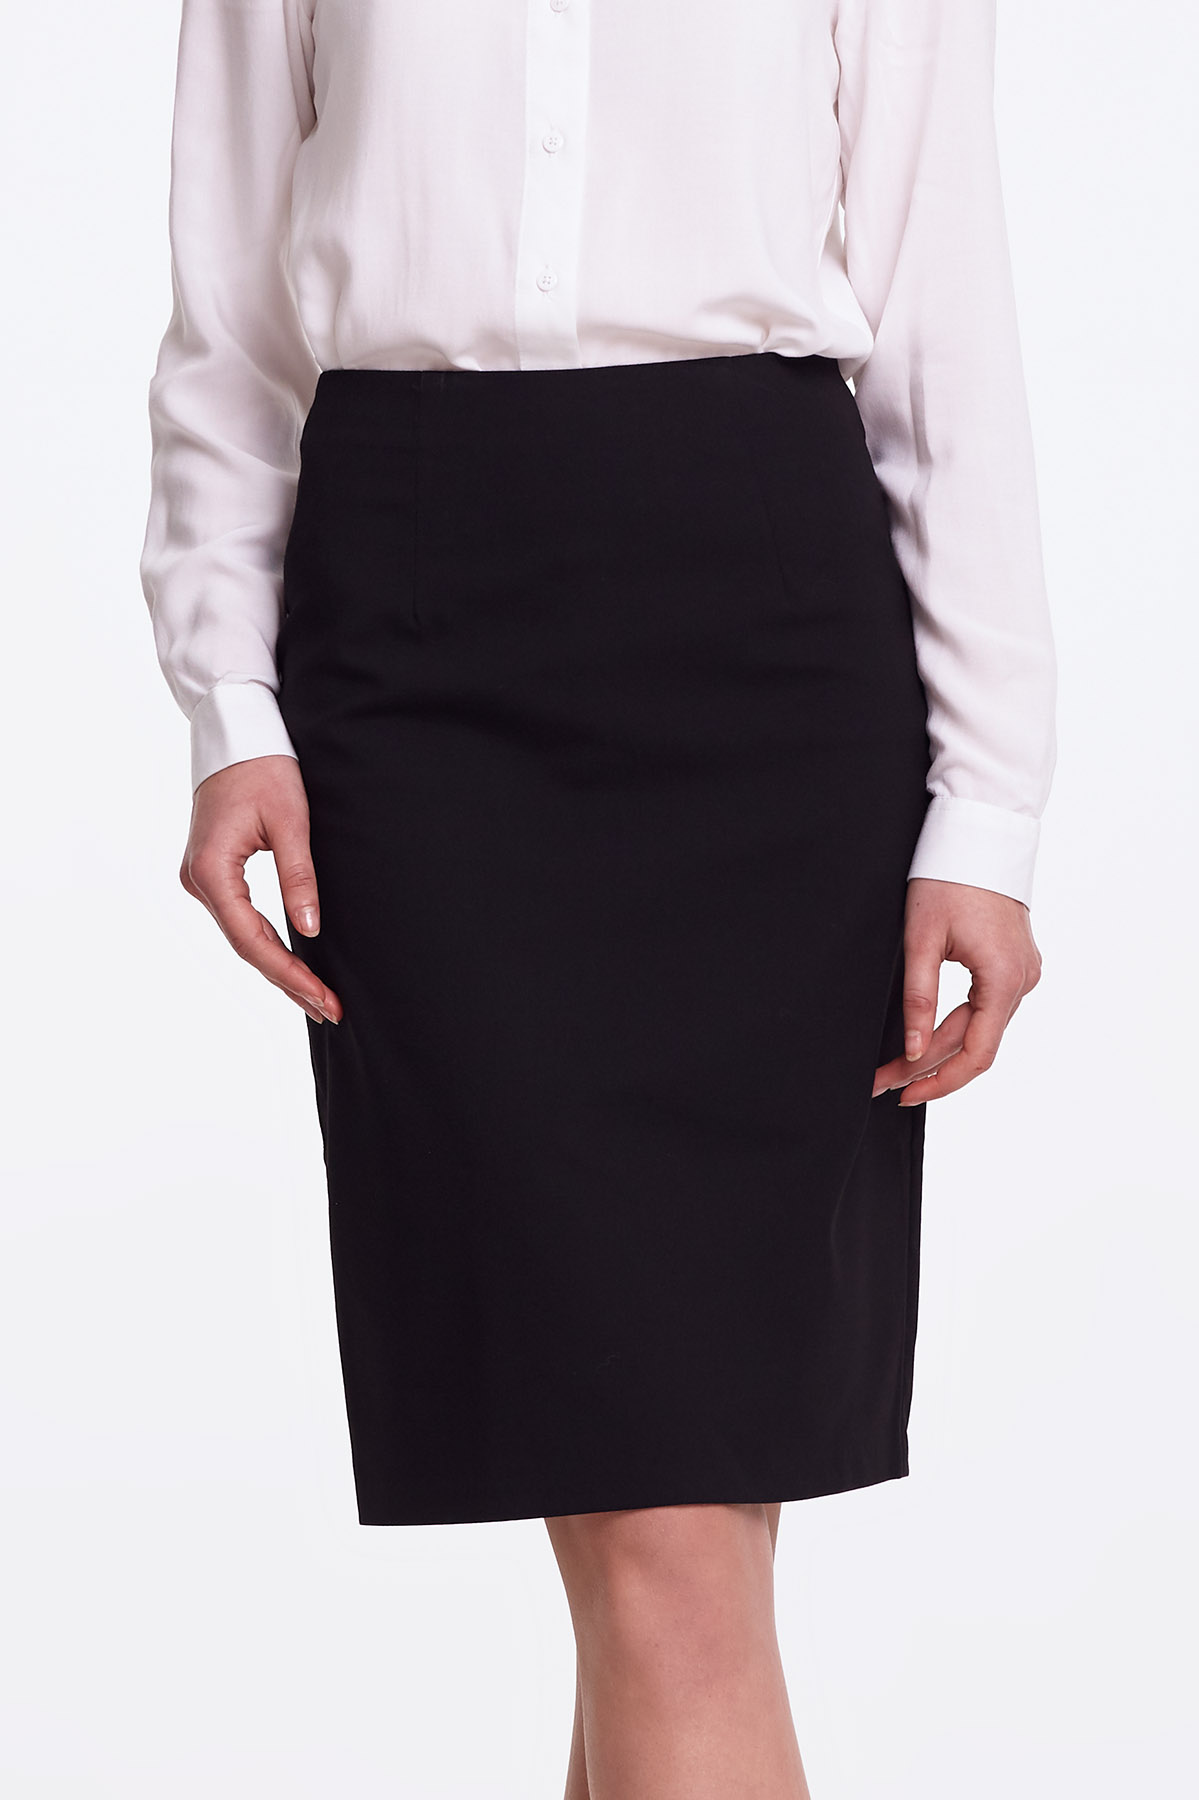 Black pencil skirt, photo 1